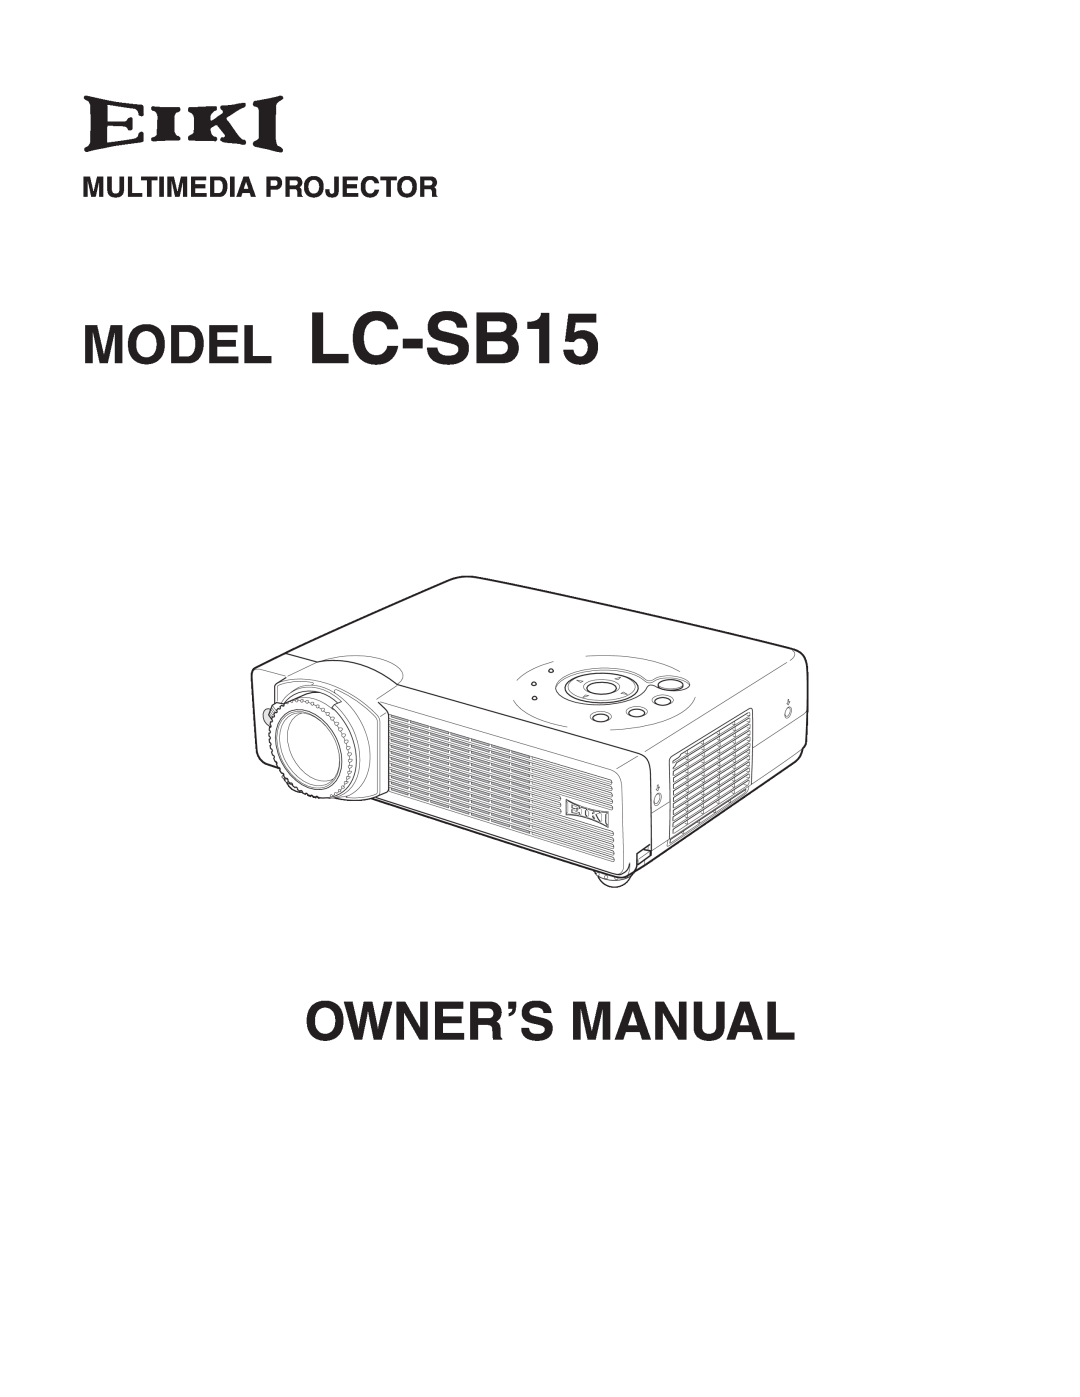 Eiki lc-sb15 owner manual MODEL LC-SB15, Multimedia Projector 